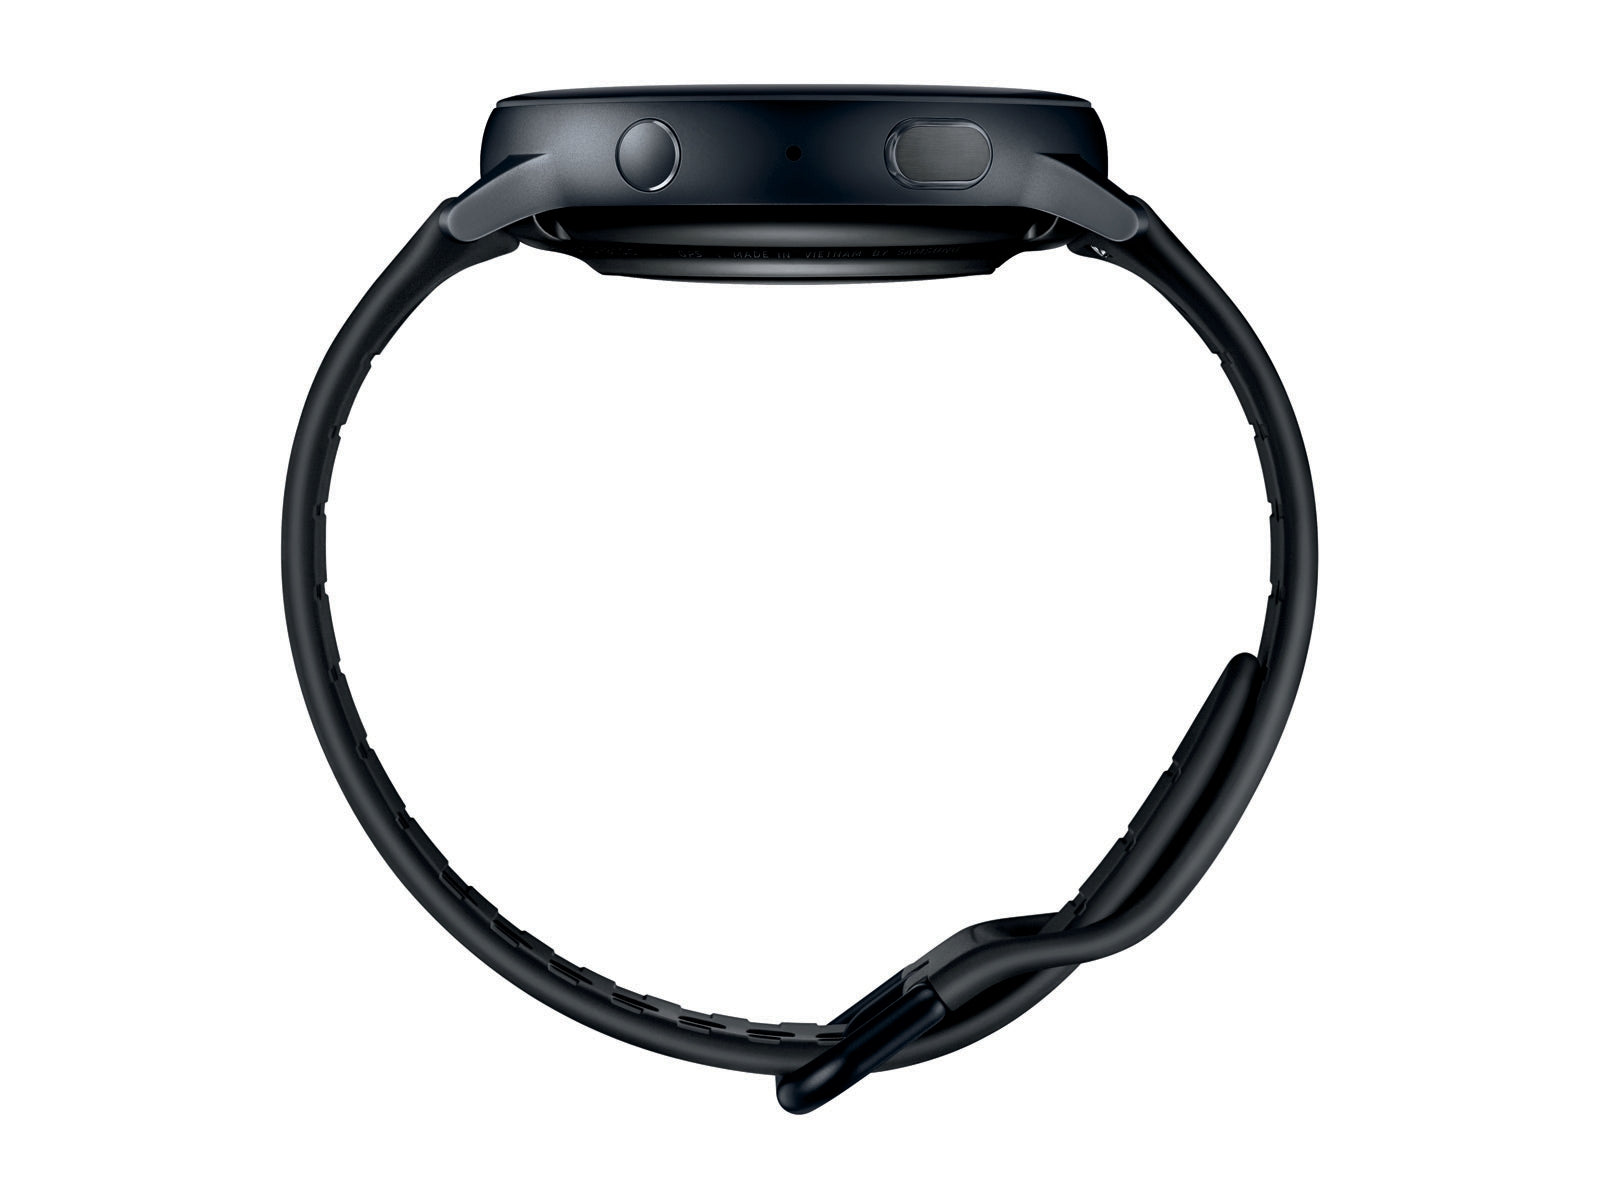 Samsung SM-R820NZKUUDA-RB Galaxy Watch Active2 44mm Bluetooth, Aqua Black - Certified Refurbished